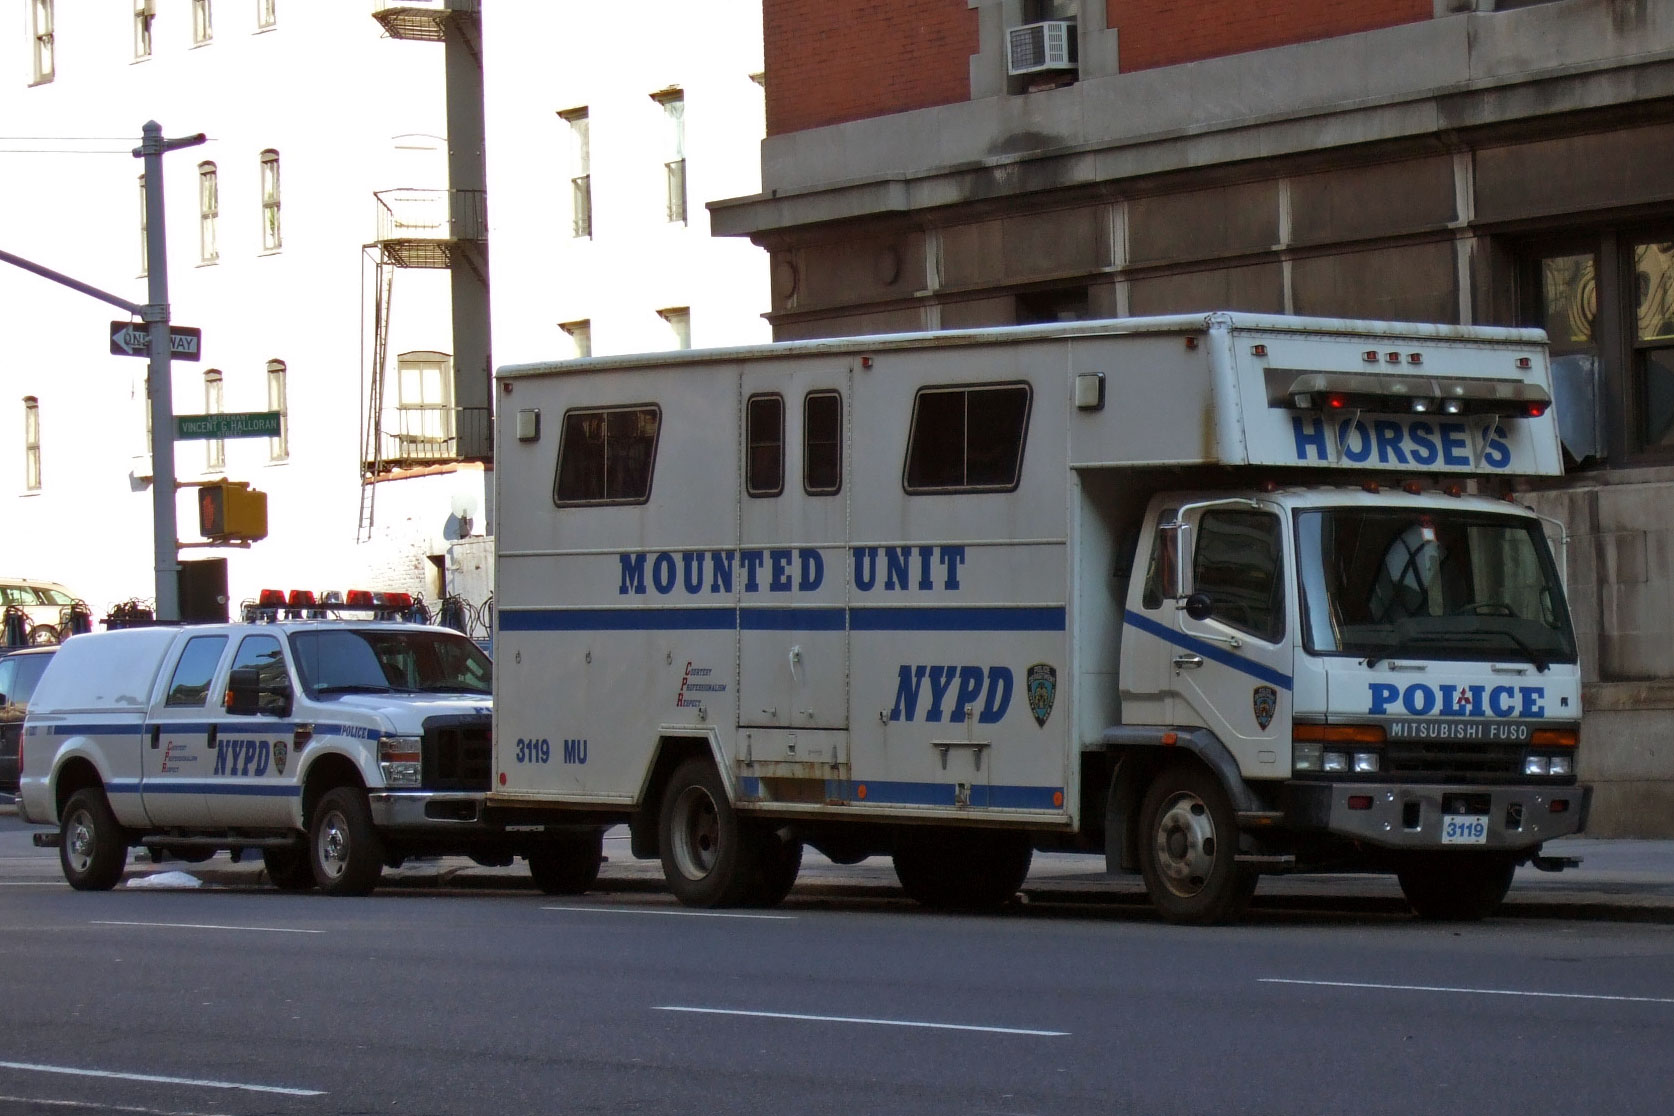 Mounted unit. Полицейский фургон NYPD. Фургон полиции Нью Йорка. Полицейский фургон Нью Йорка 1993 г. Автобусы полиции Нью Йорка.